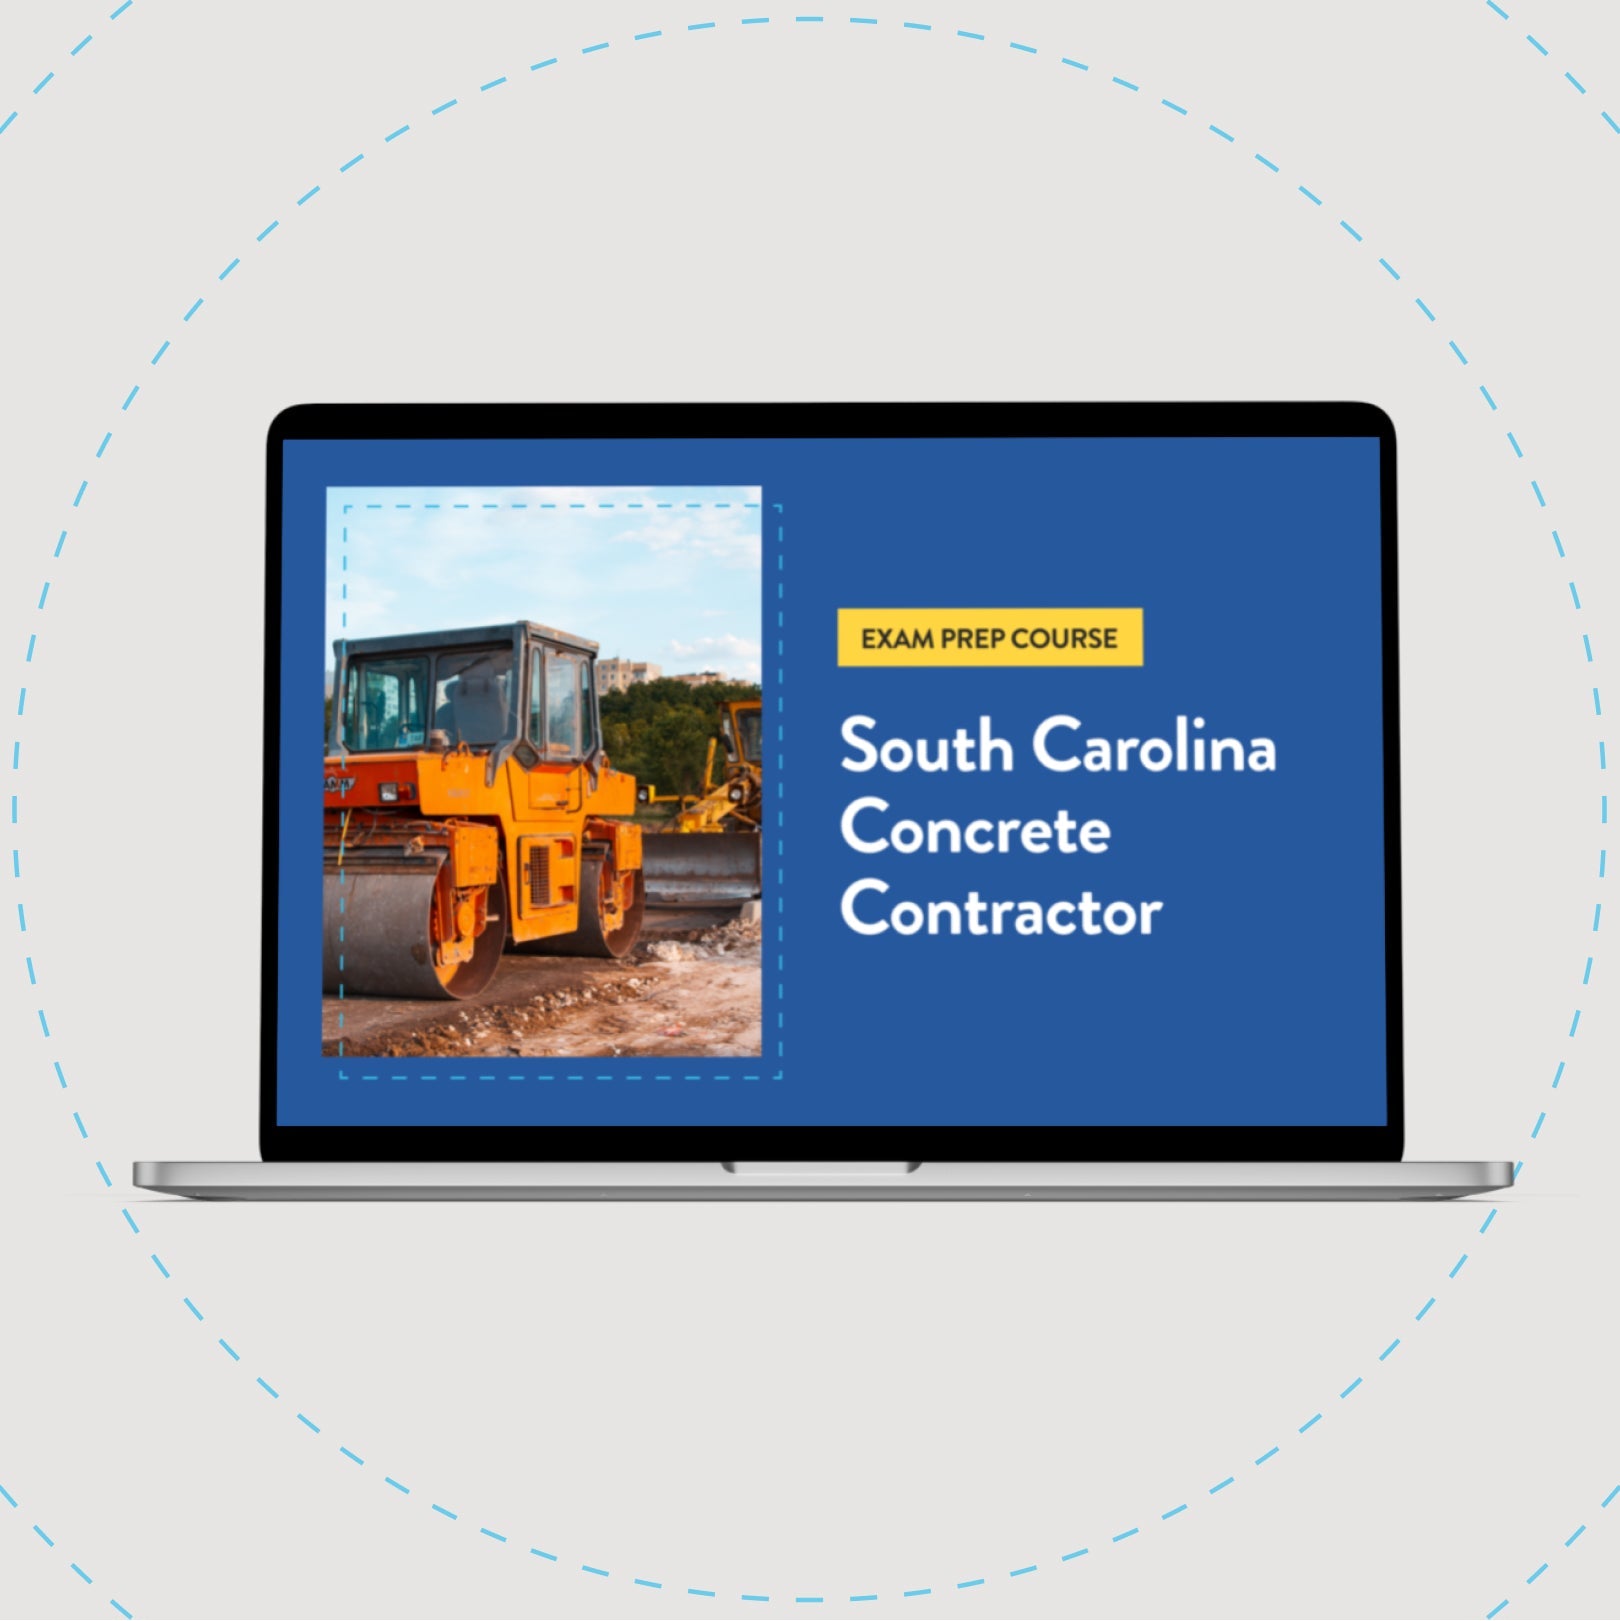 South Carolina Concrete Contractor Exam Prep Course